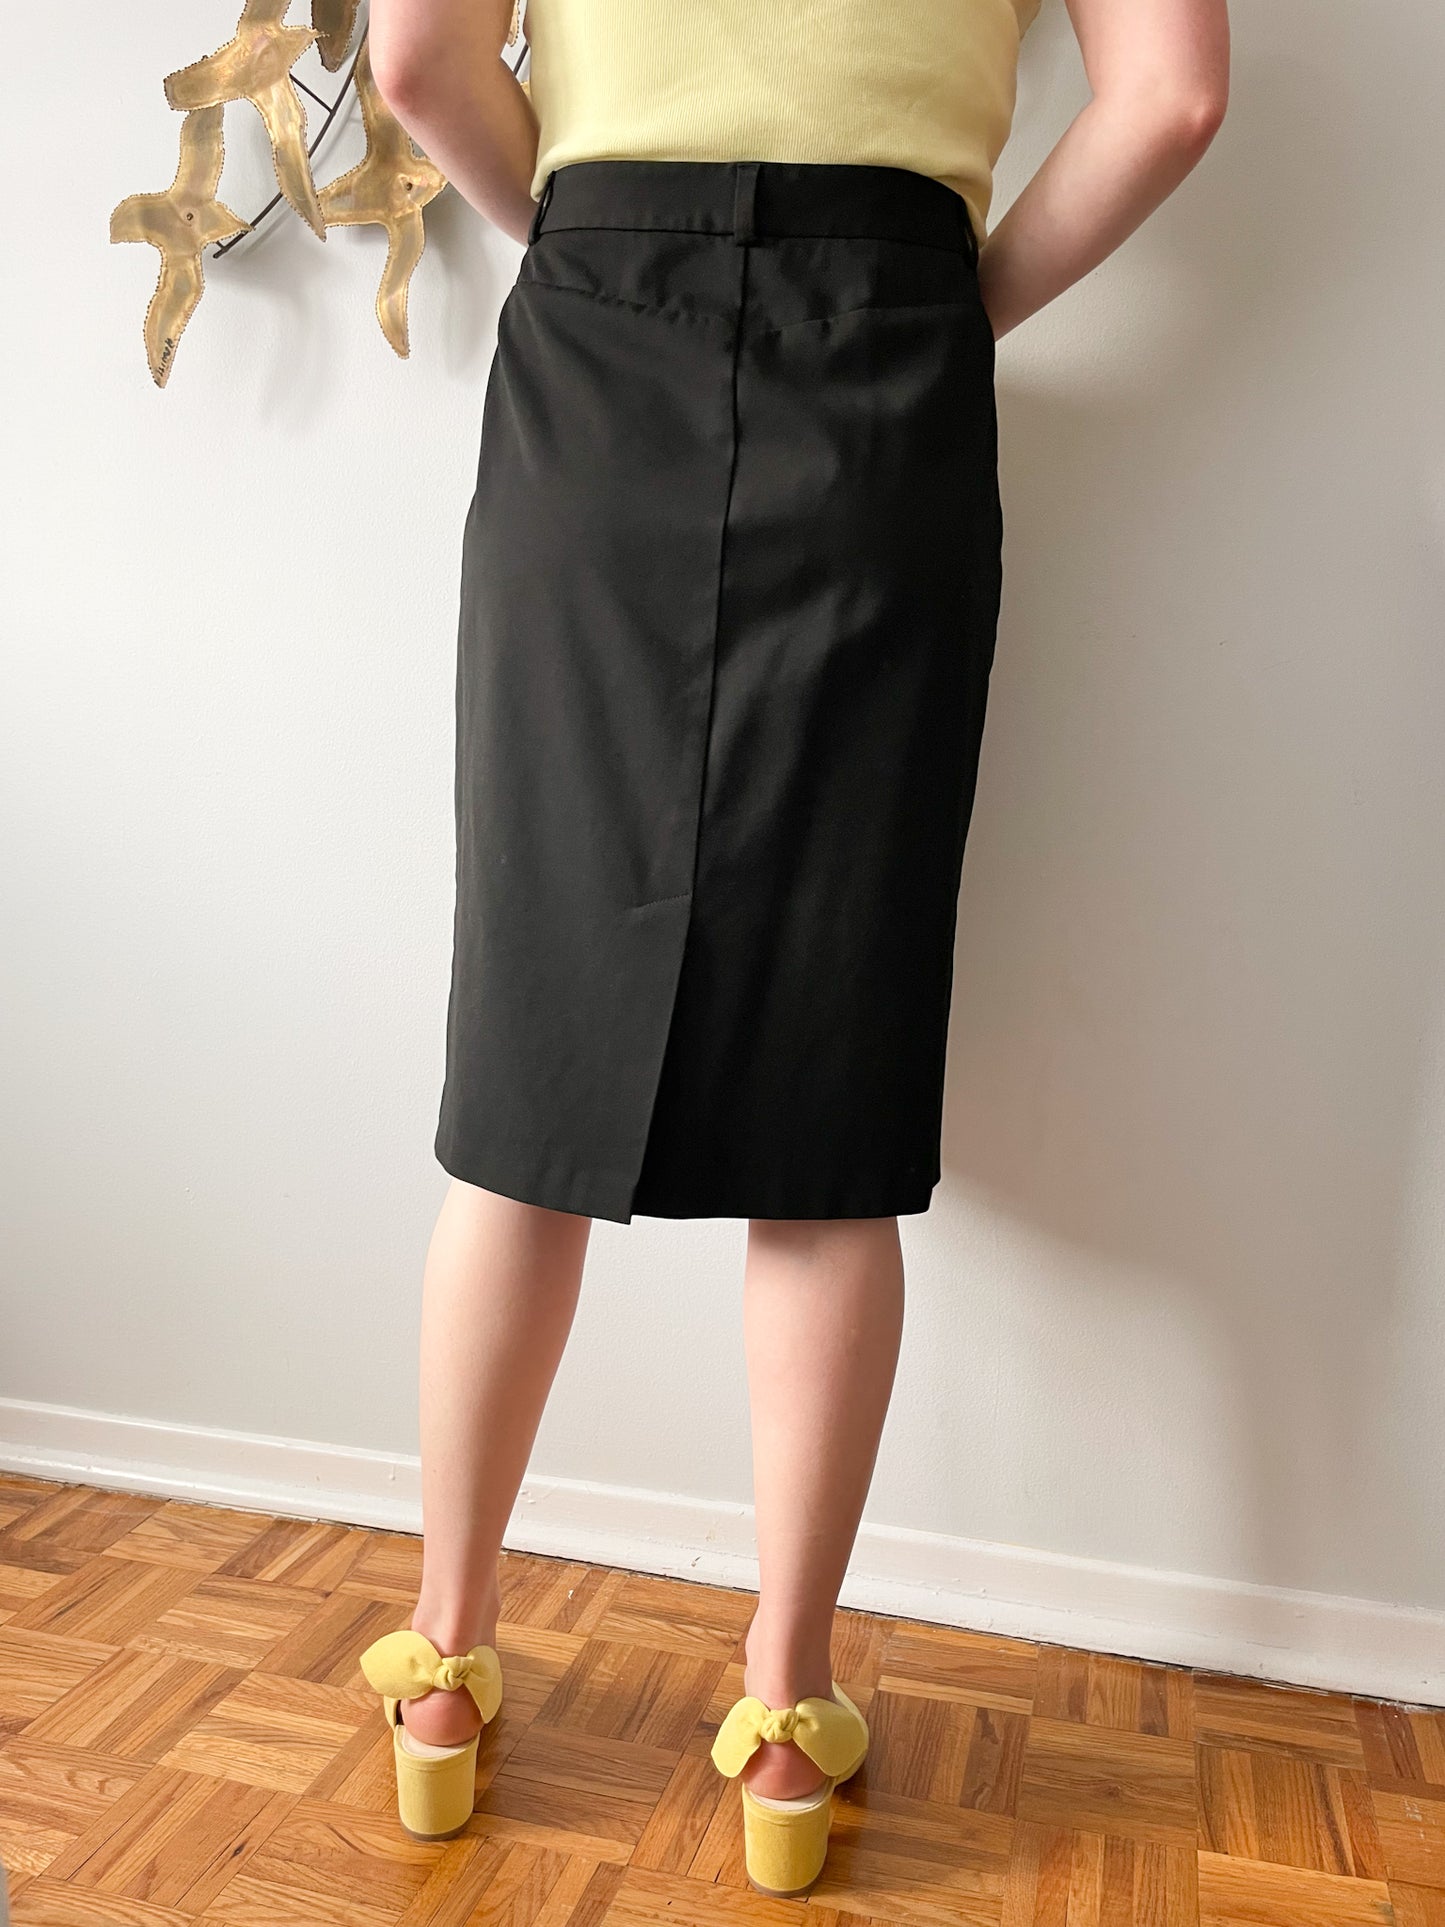 Gap Vintage Black Stretch High Rise Knee Length Pencil Skirt - Size 10